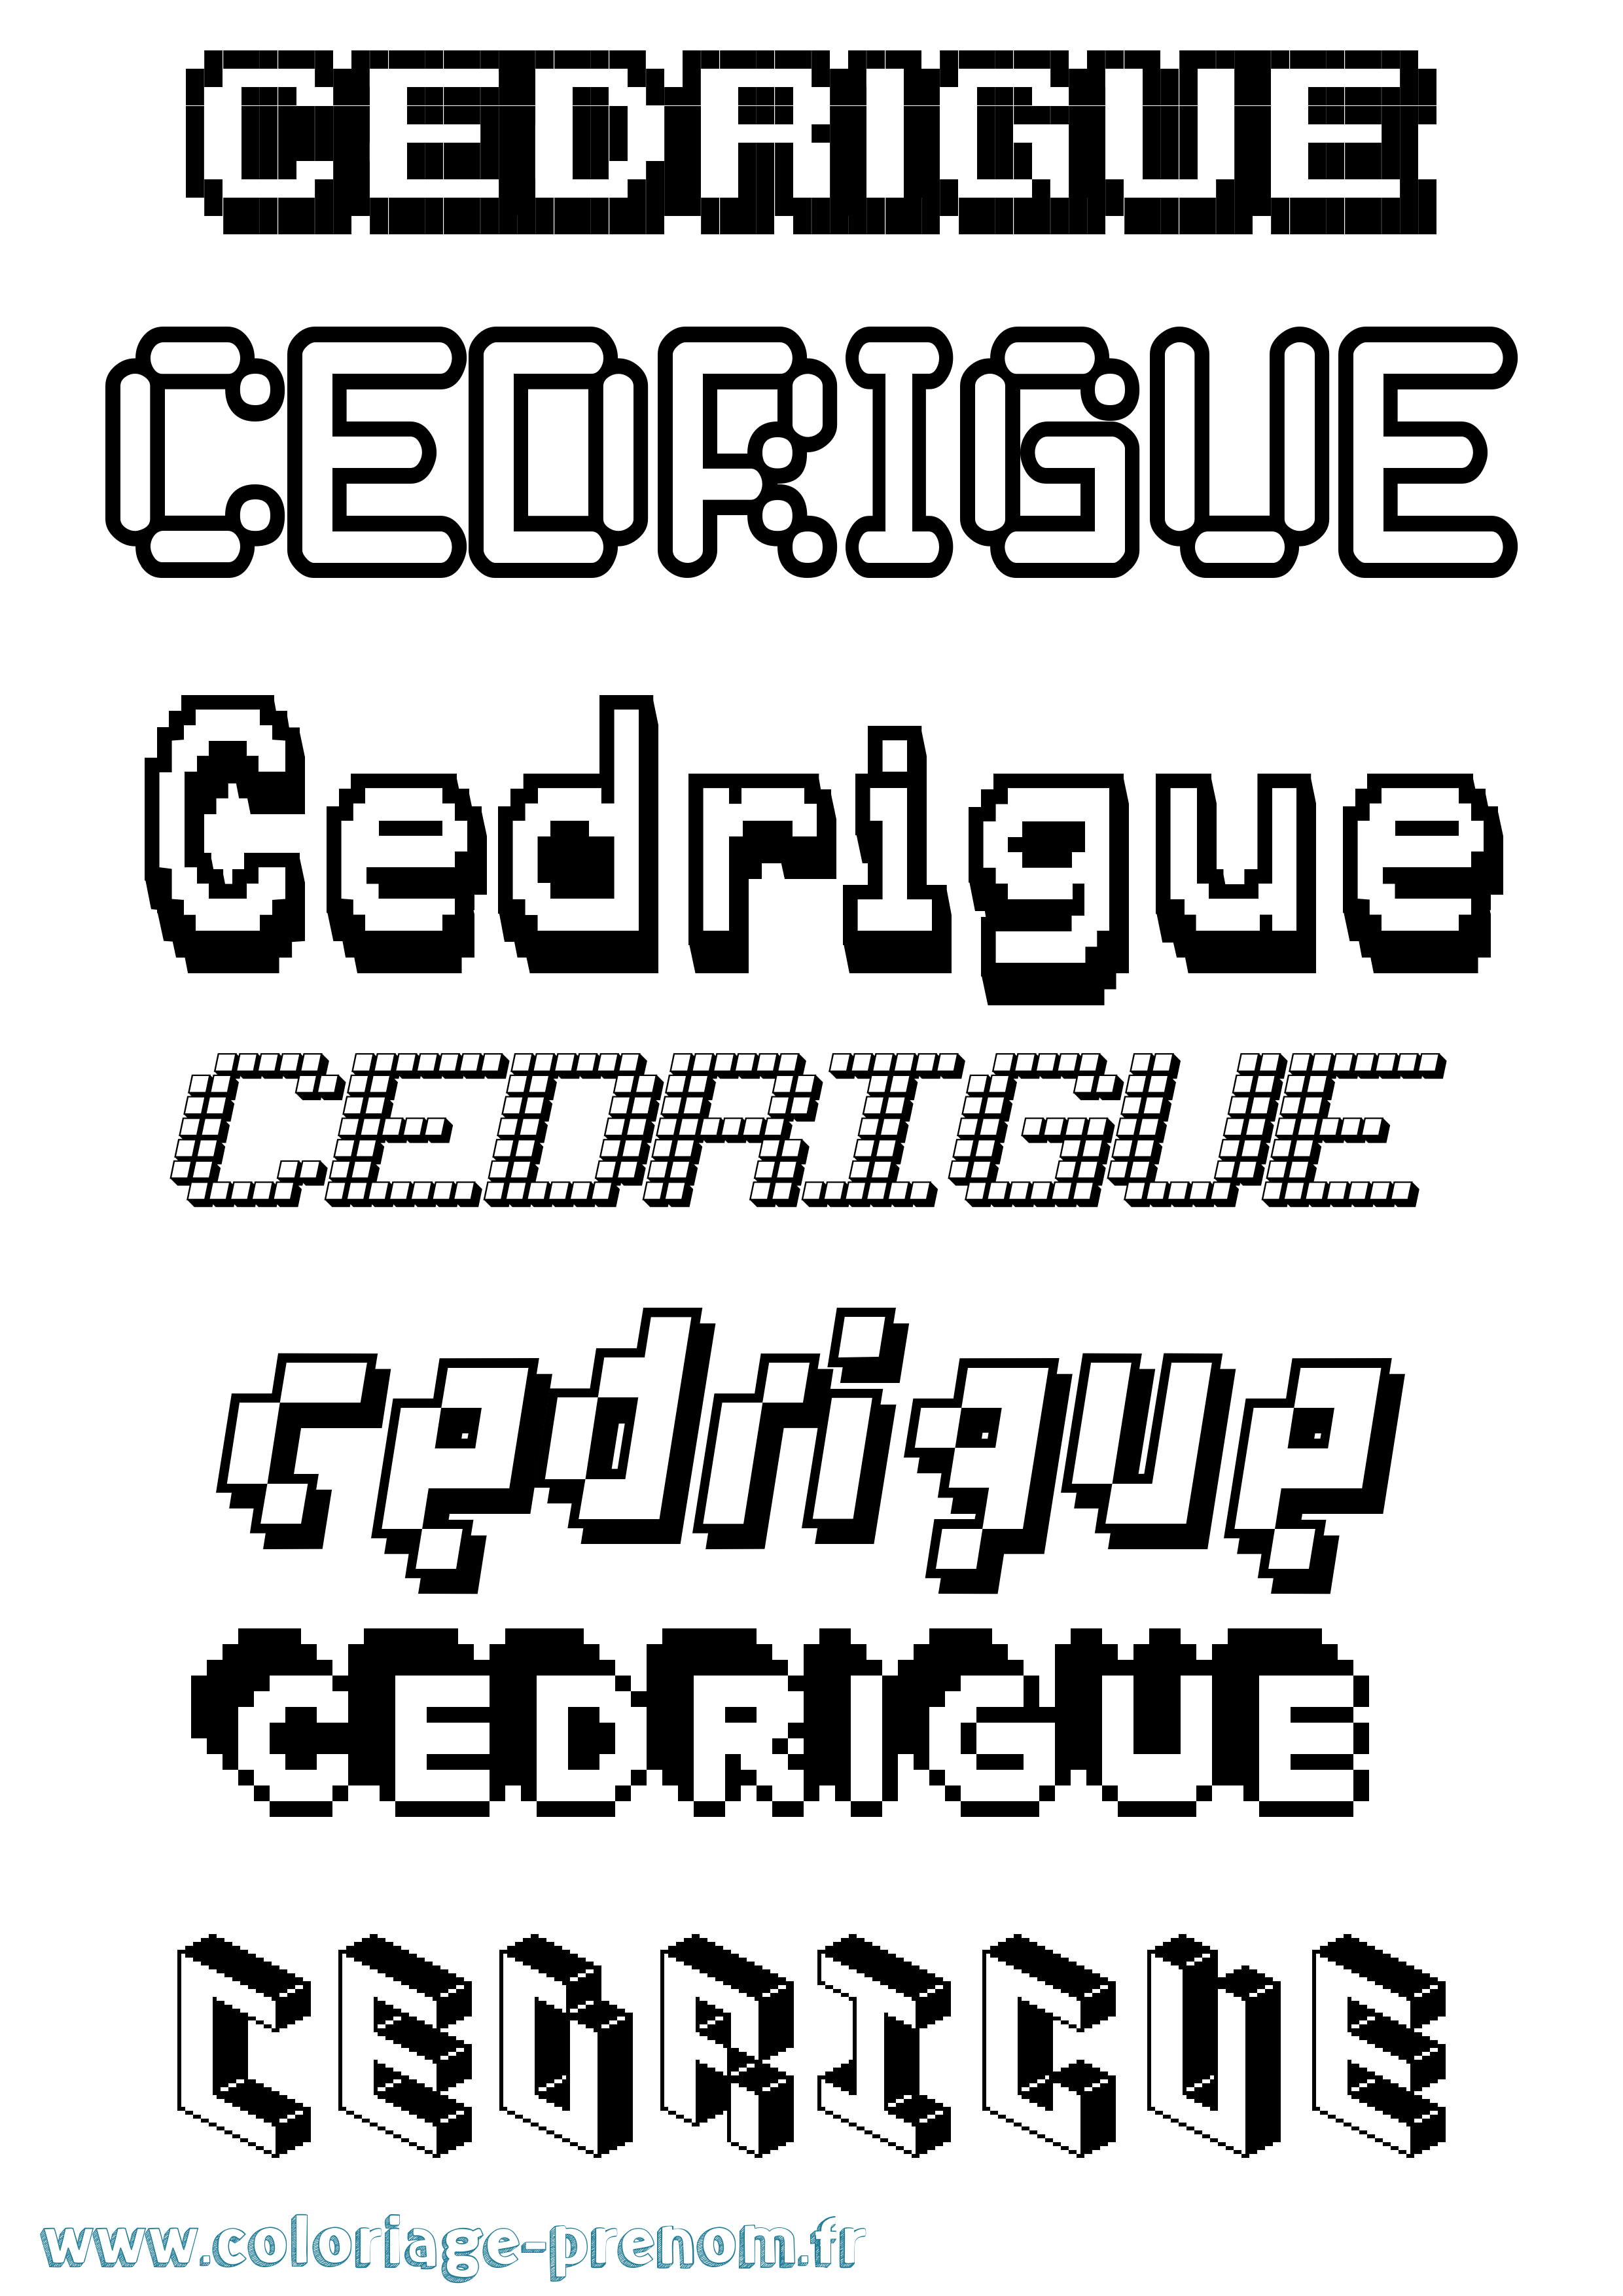 Coloriage prénom Cedrigue Pixel